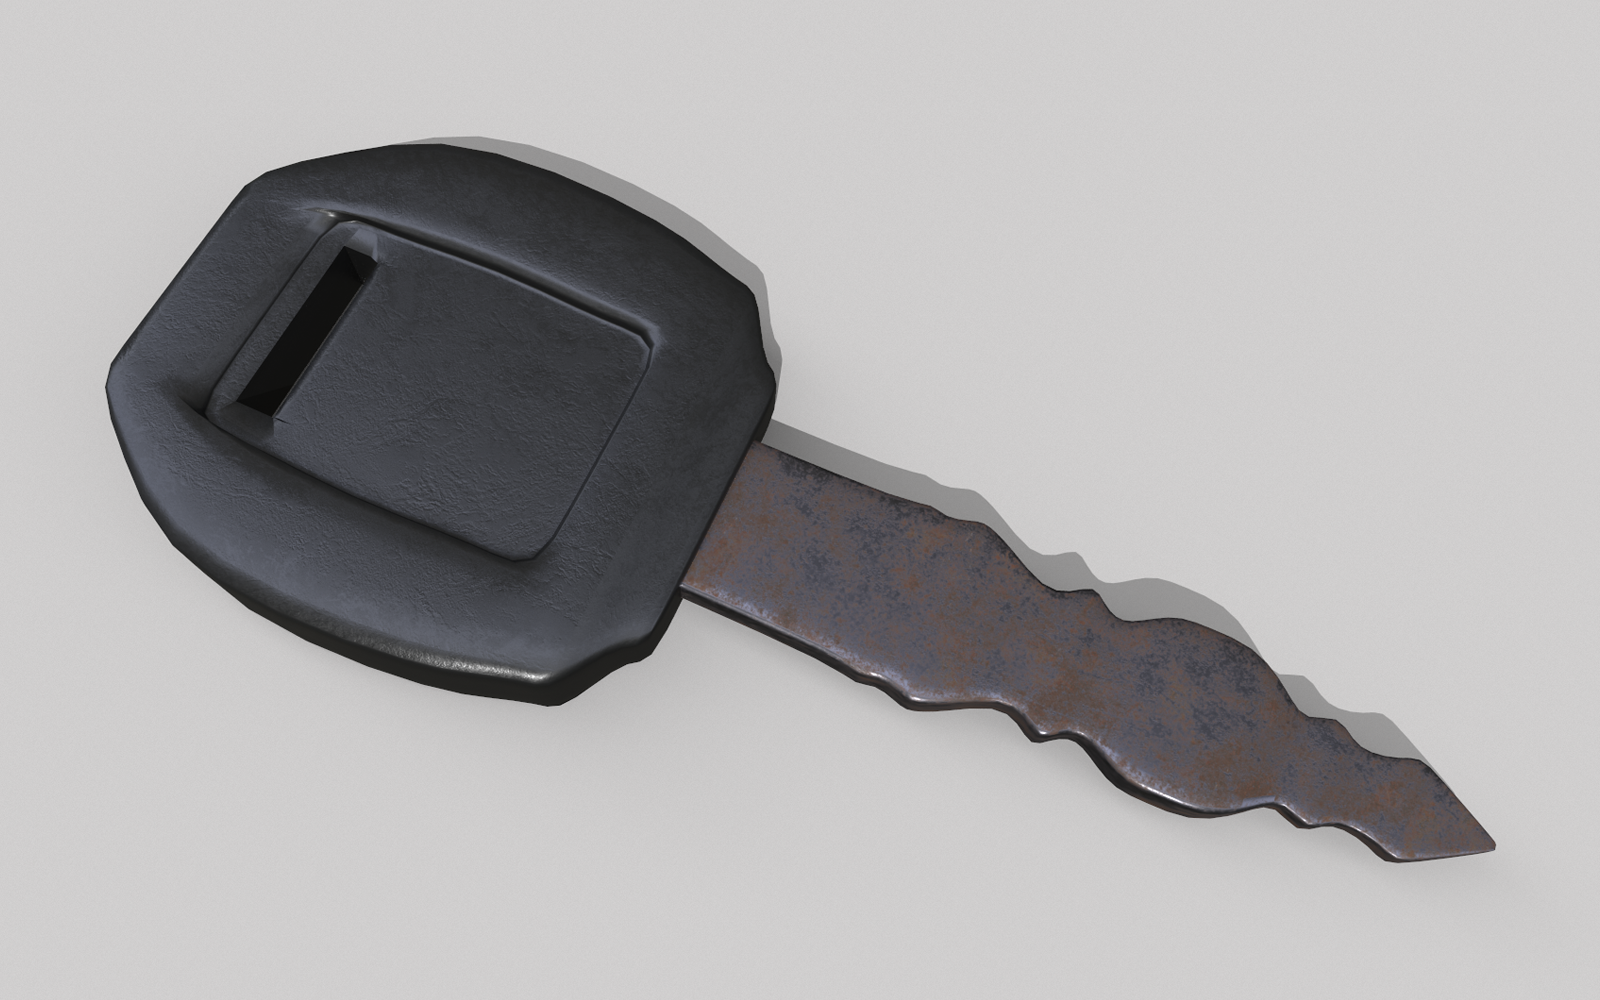 Vehicle Key Low-poly 3D model